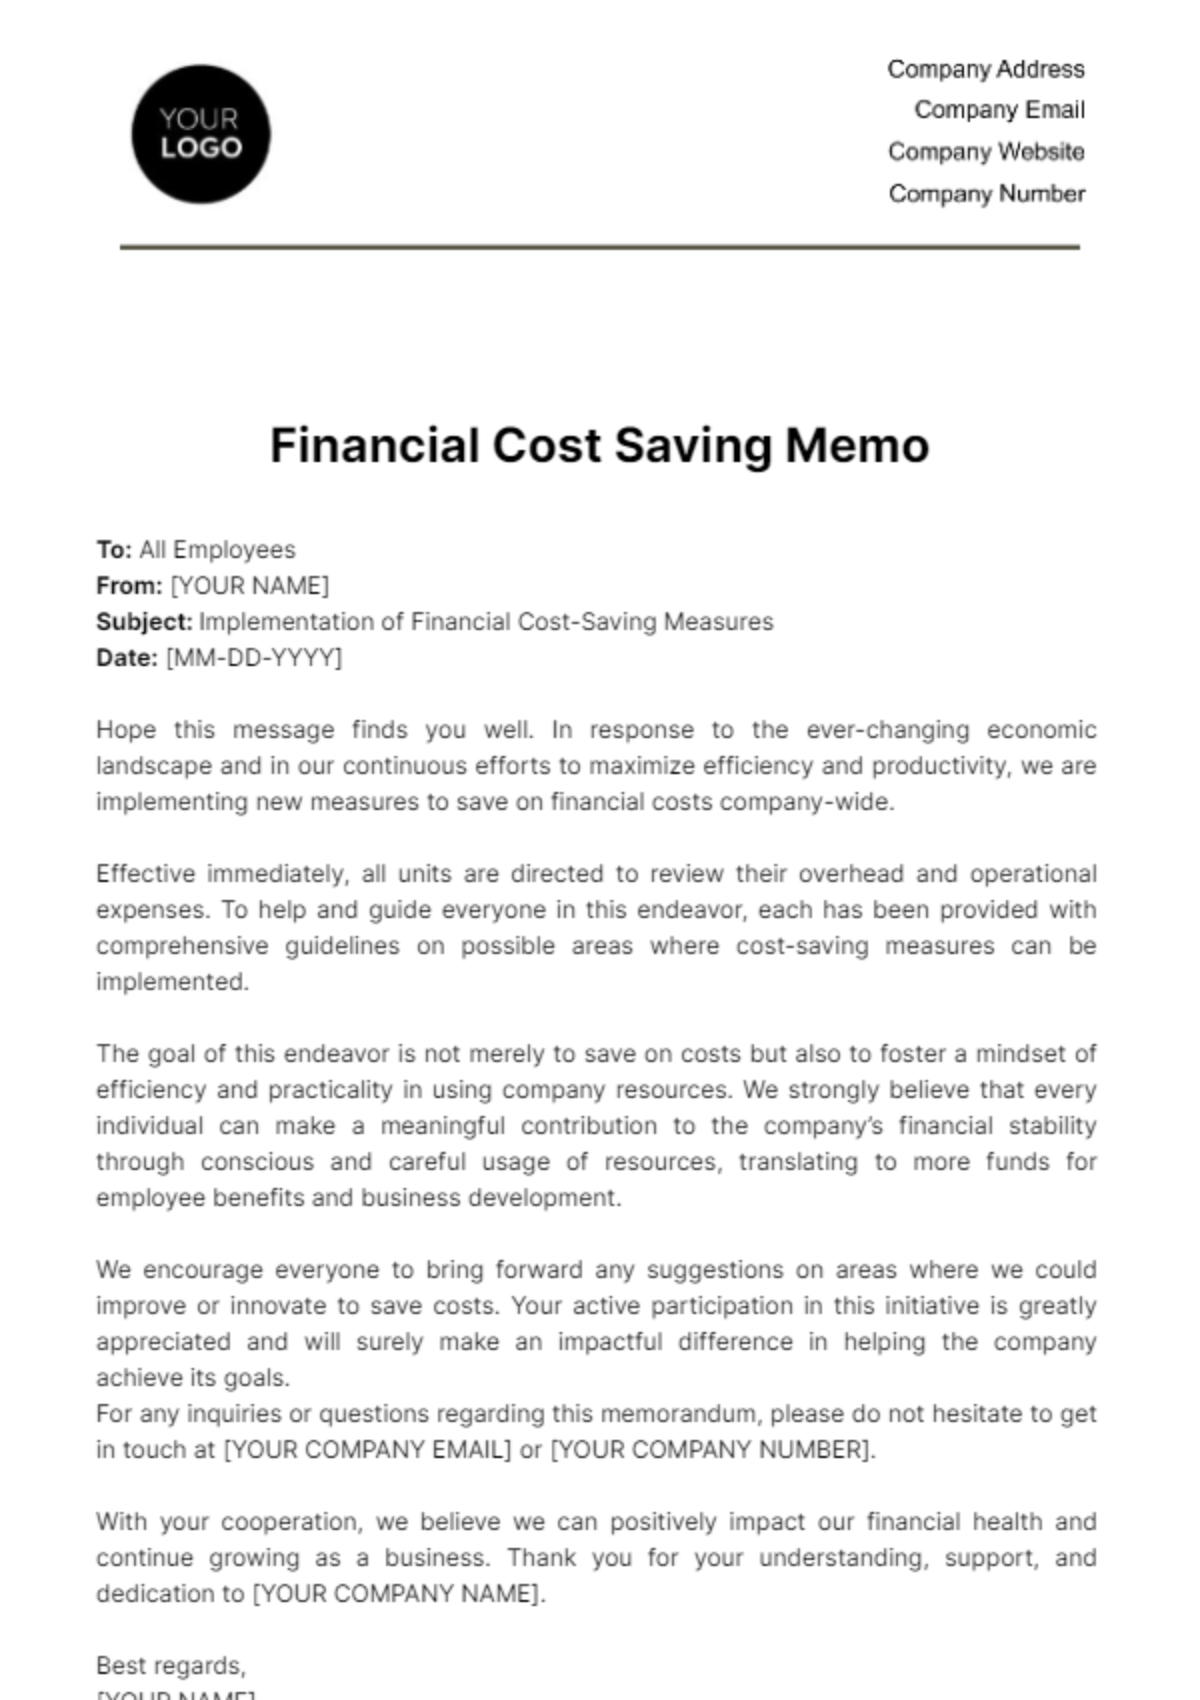 Financial Cost Saving Memo Template